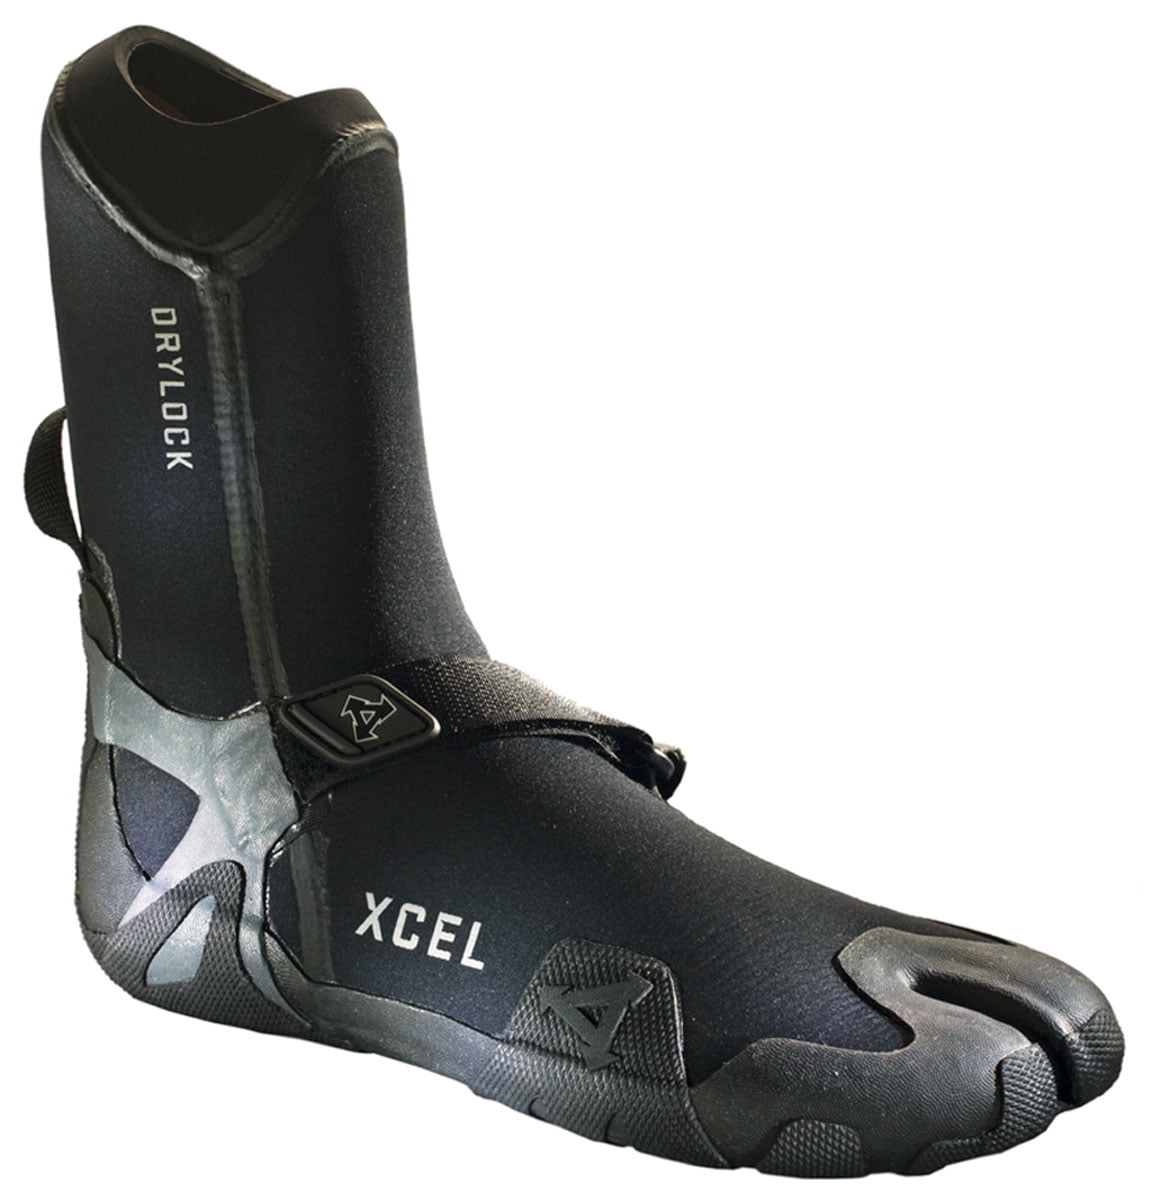 3mm XCEL DRYLOCK Split Toe Wetsuit Boots - Walmart.com